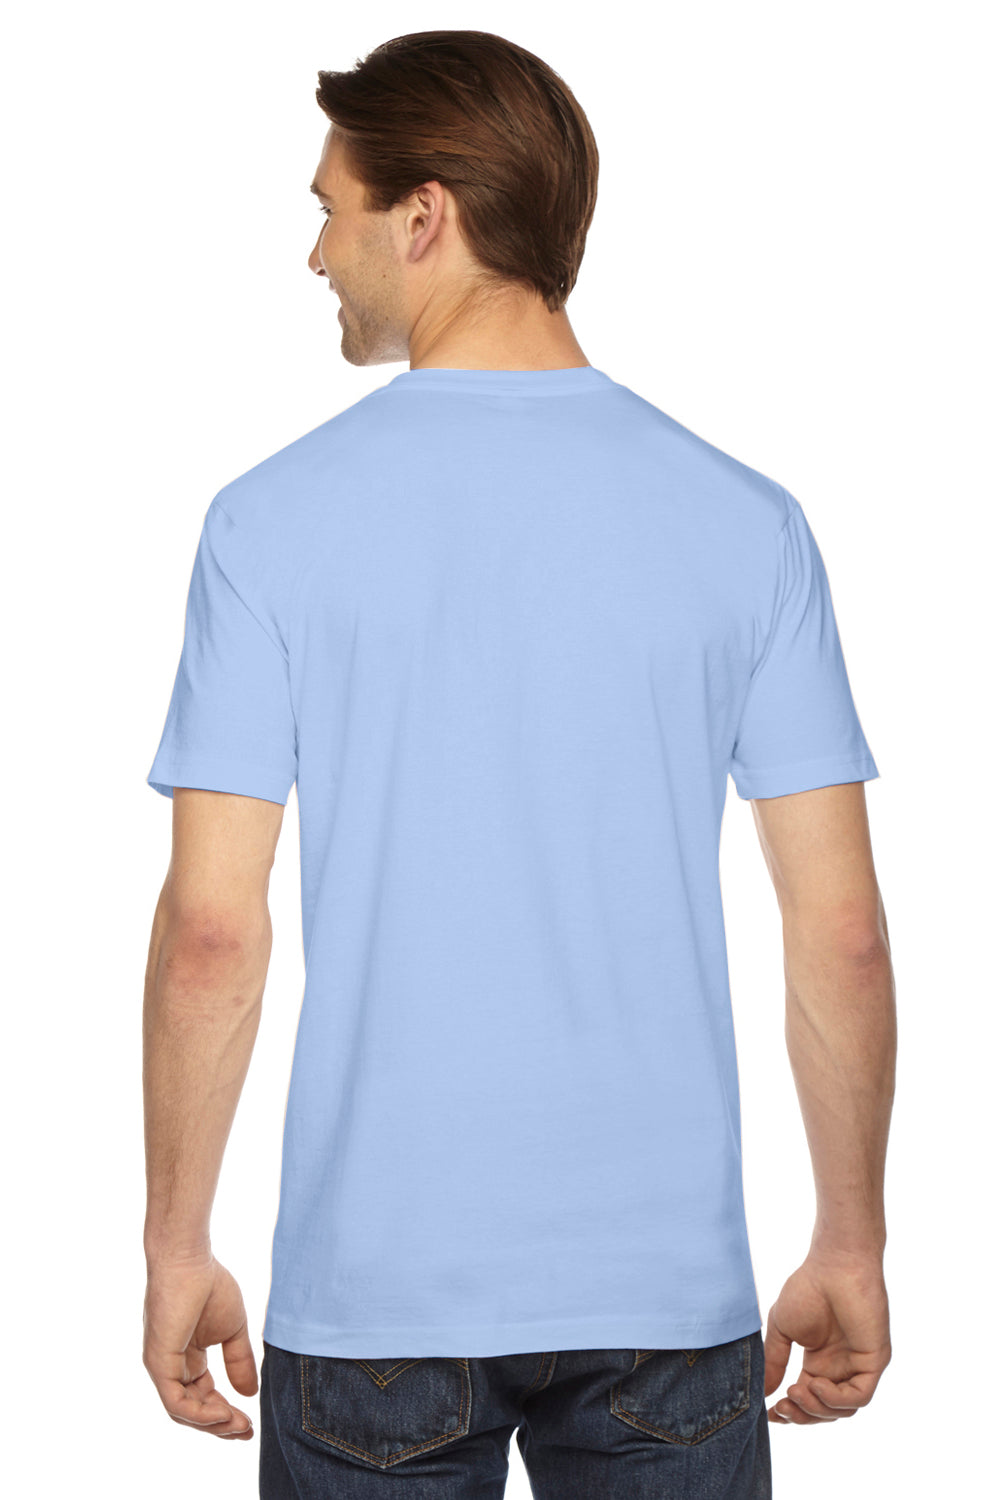 American Apparel 2001 Mens USA Made Fine Jersey Short Sleeve Crewneck T-Shirt Baby Blue Back